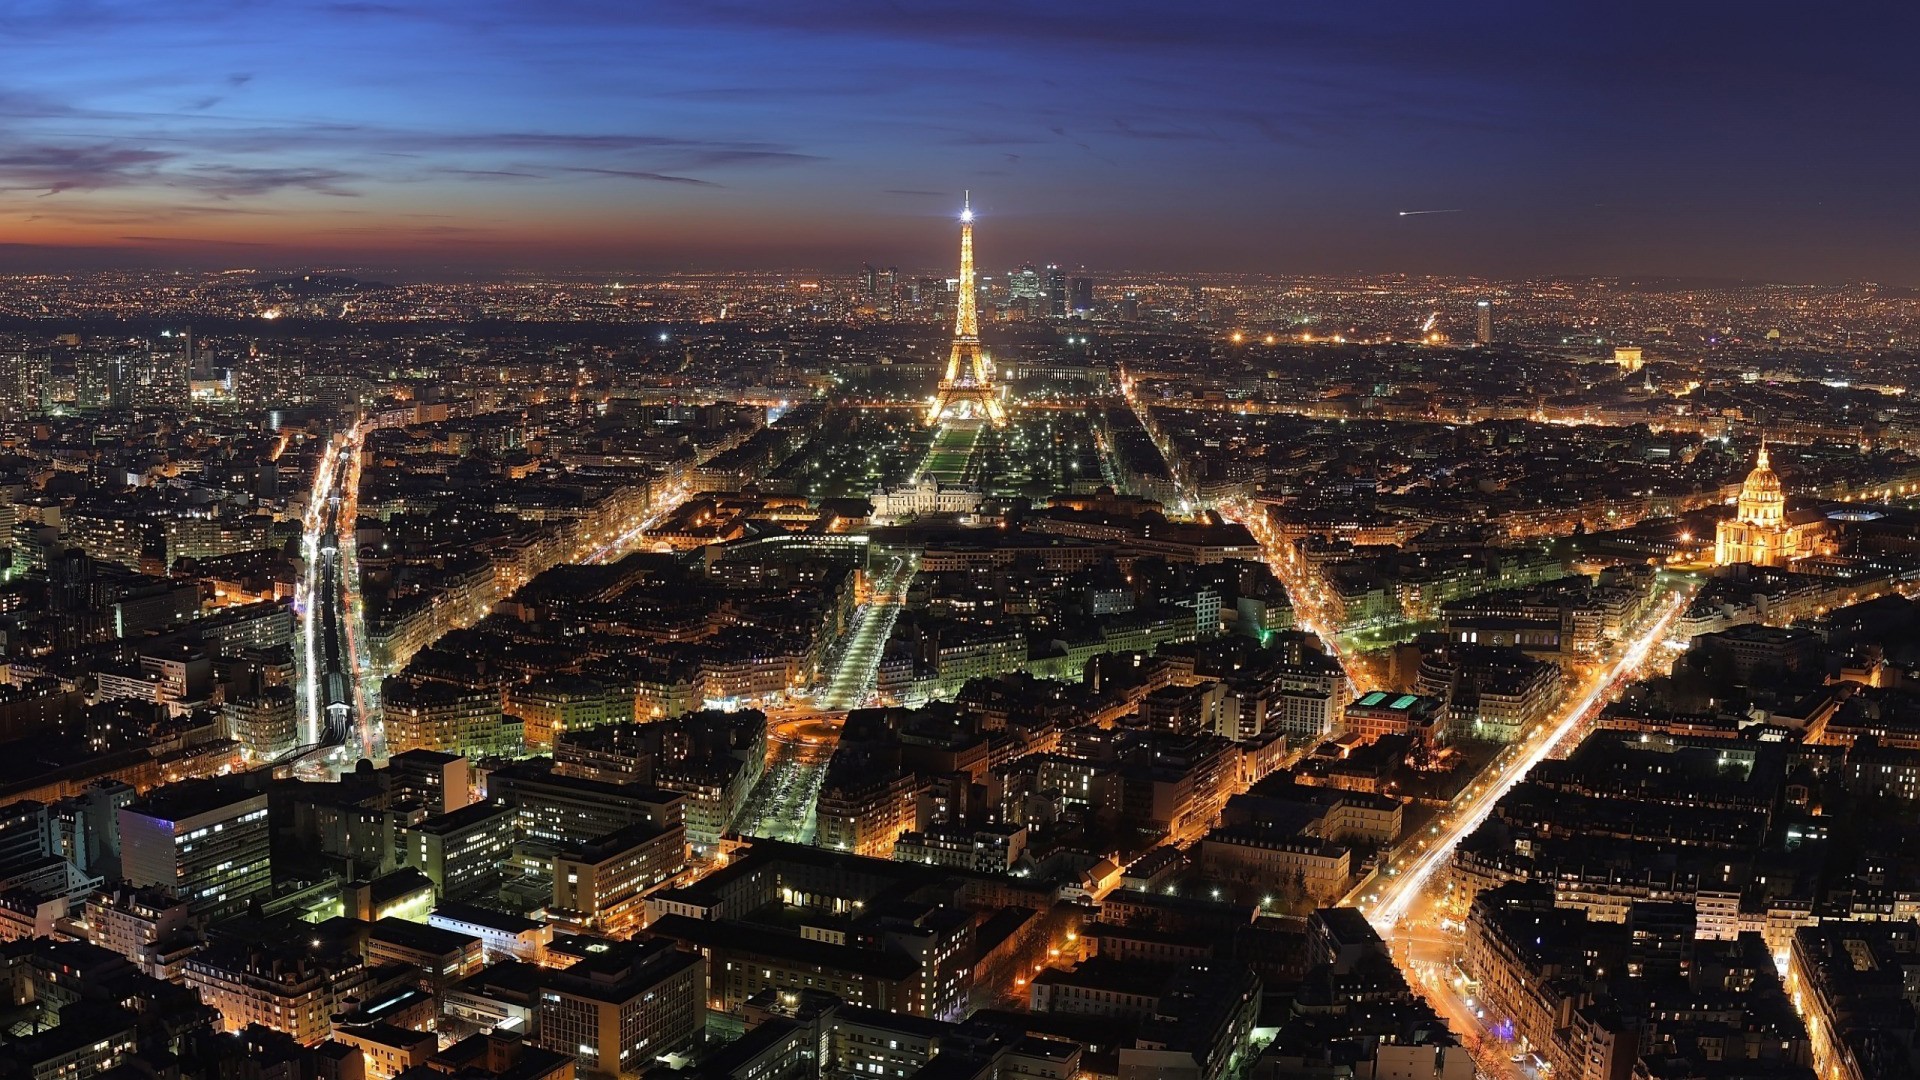 General 1920x1080 cityscape Paris France Eiffel Tower city night aerial view city lights landmark Europe